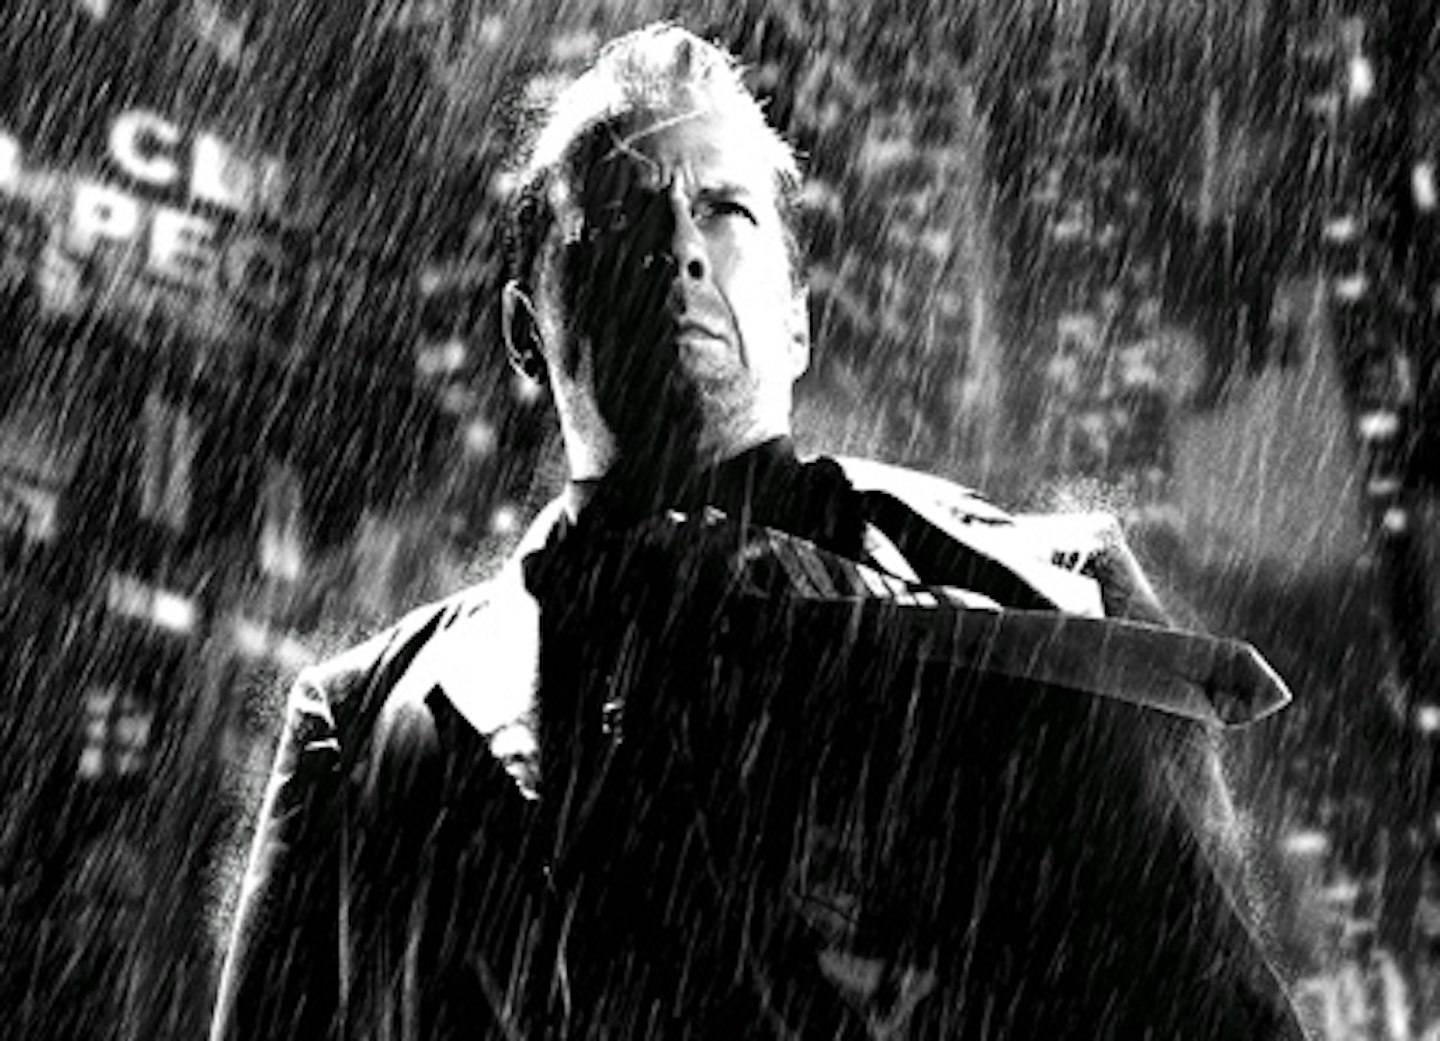 Bruce Willis in Sin City